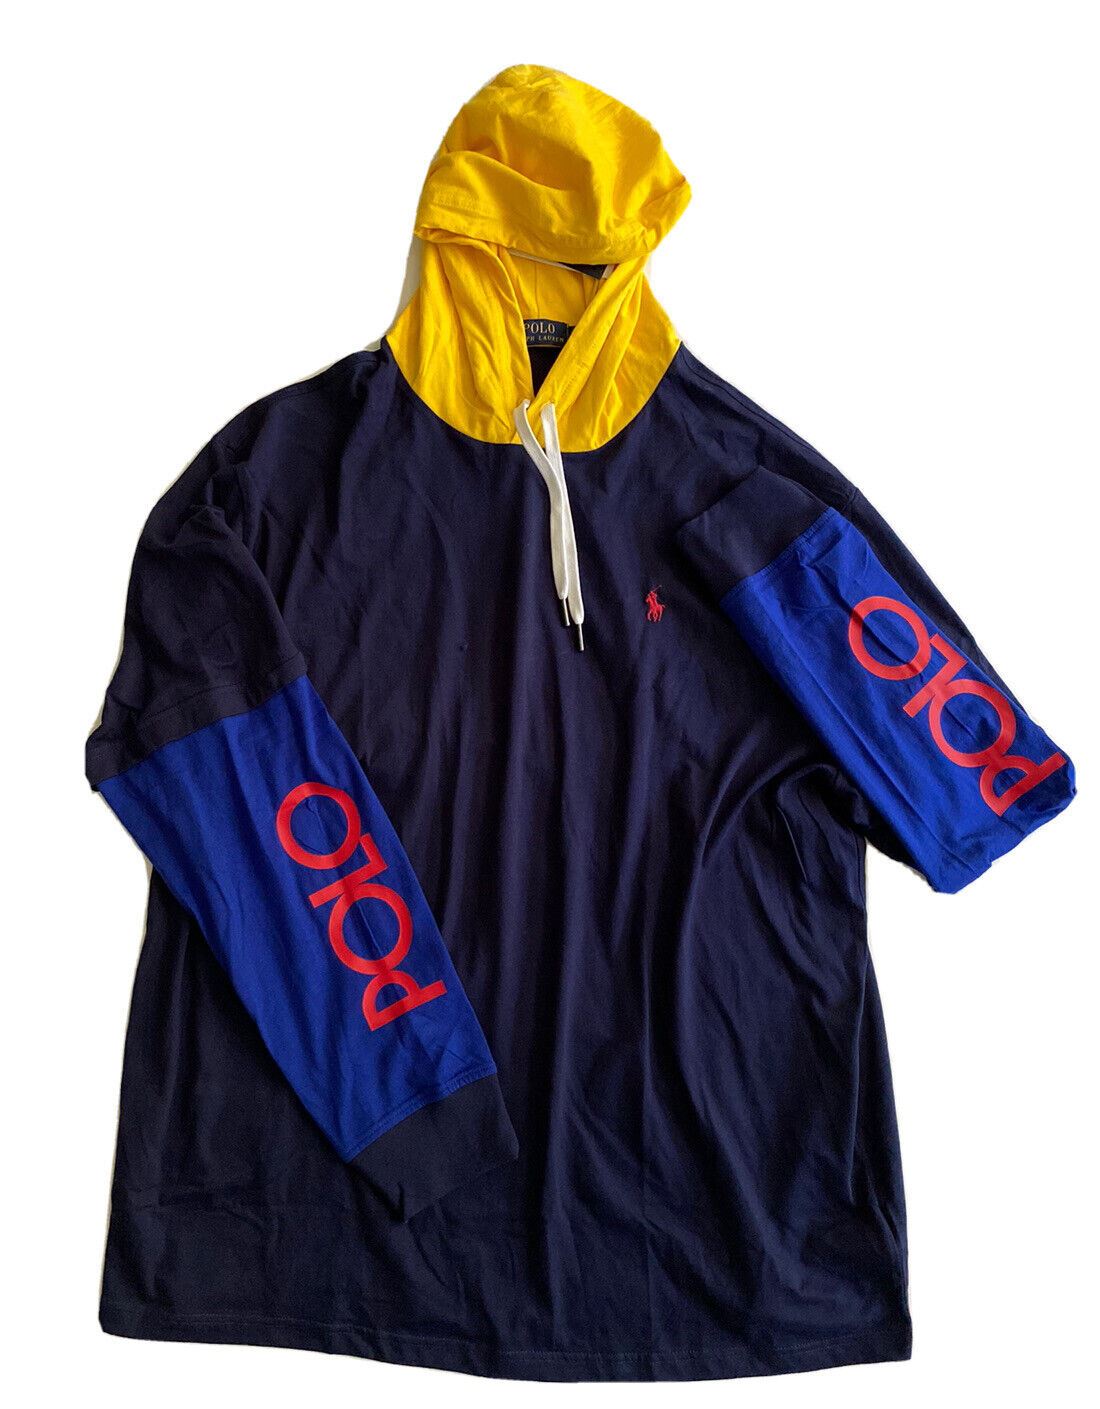 Neu mit Etikett: Polo Ralph Lauren Langarm-Sweatshirt mit Signature-Logo, Marineblau, L 